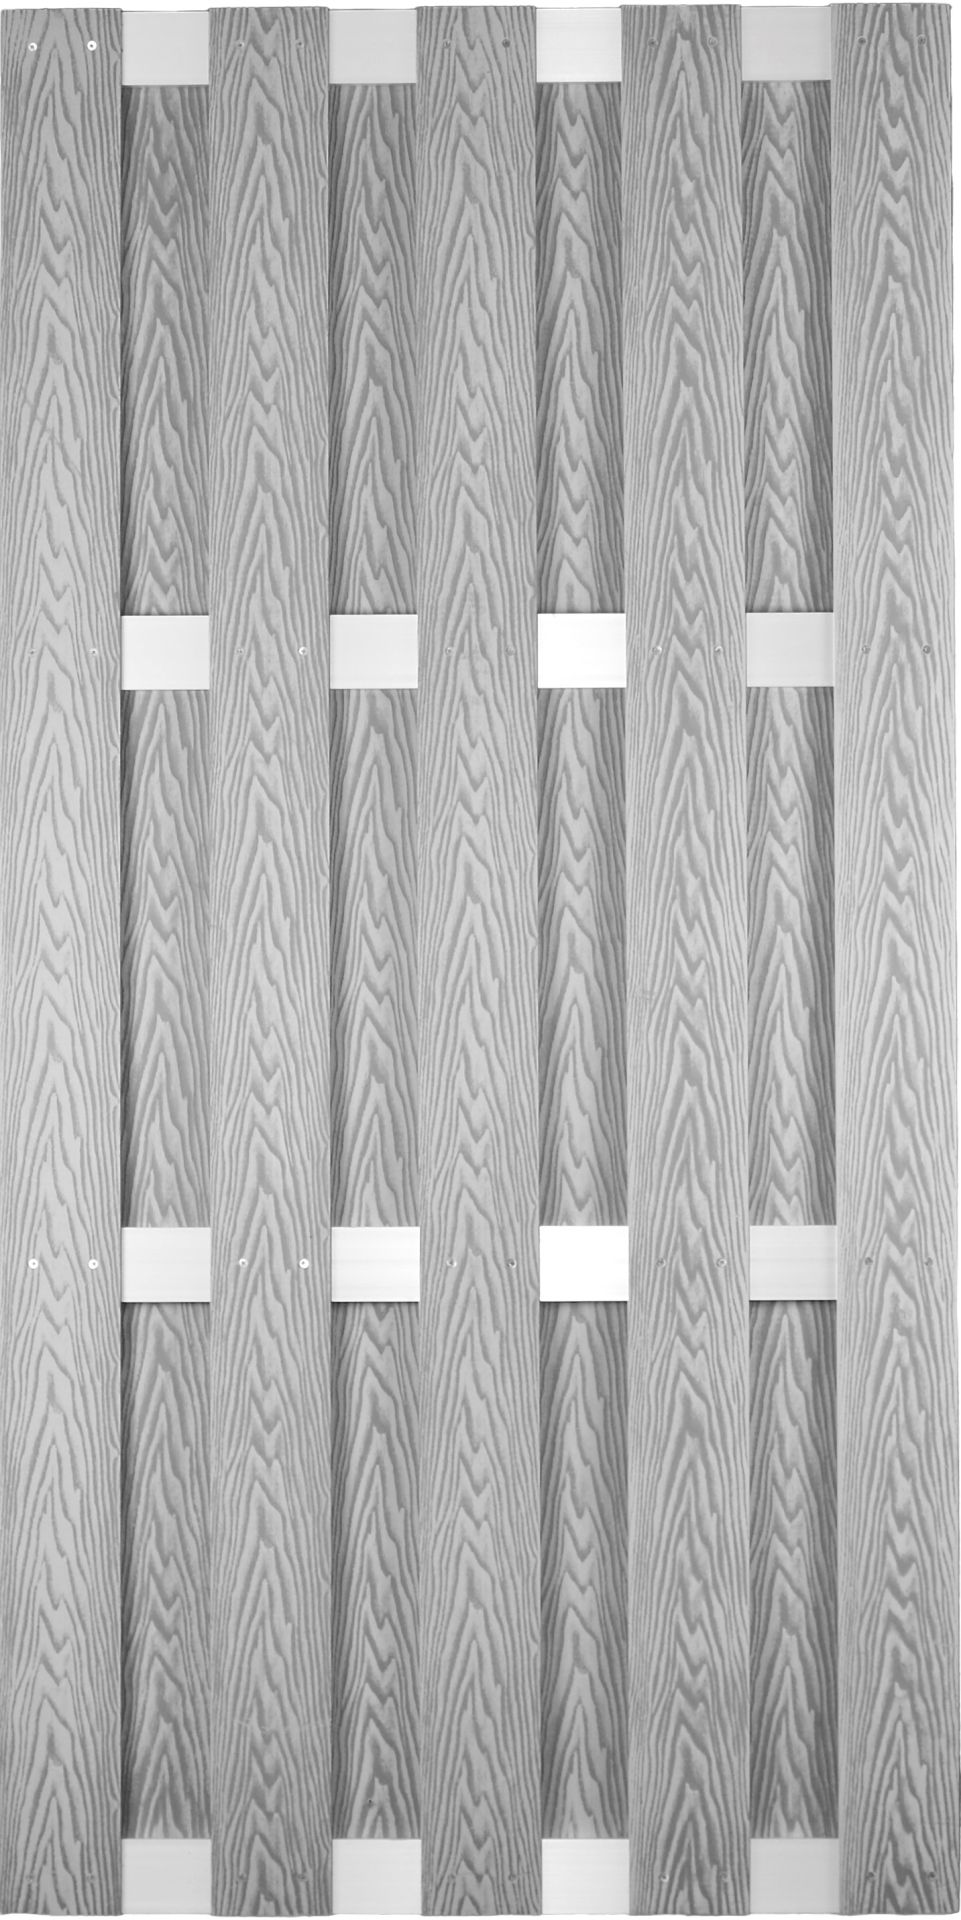 DALIAN-Serie ALU/Grau gebürstet 180 x 180 cm WPC-Bretterzaun2